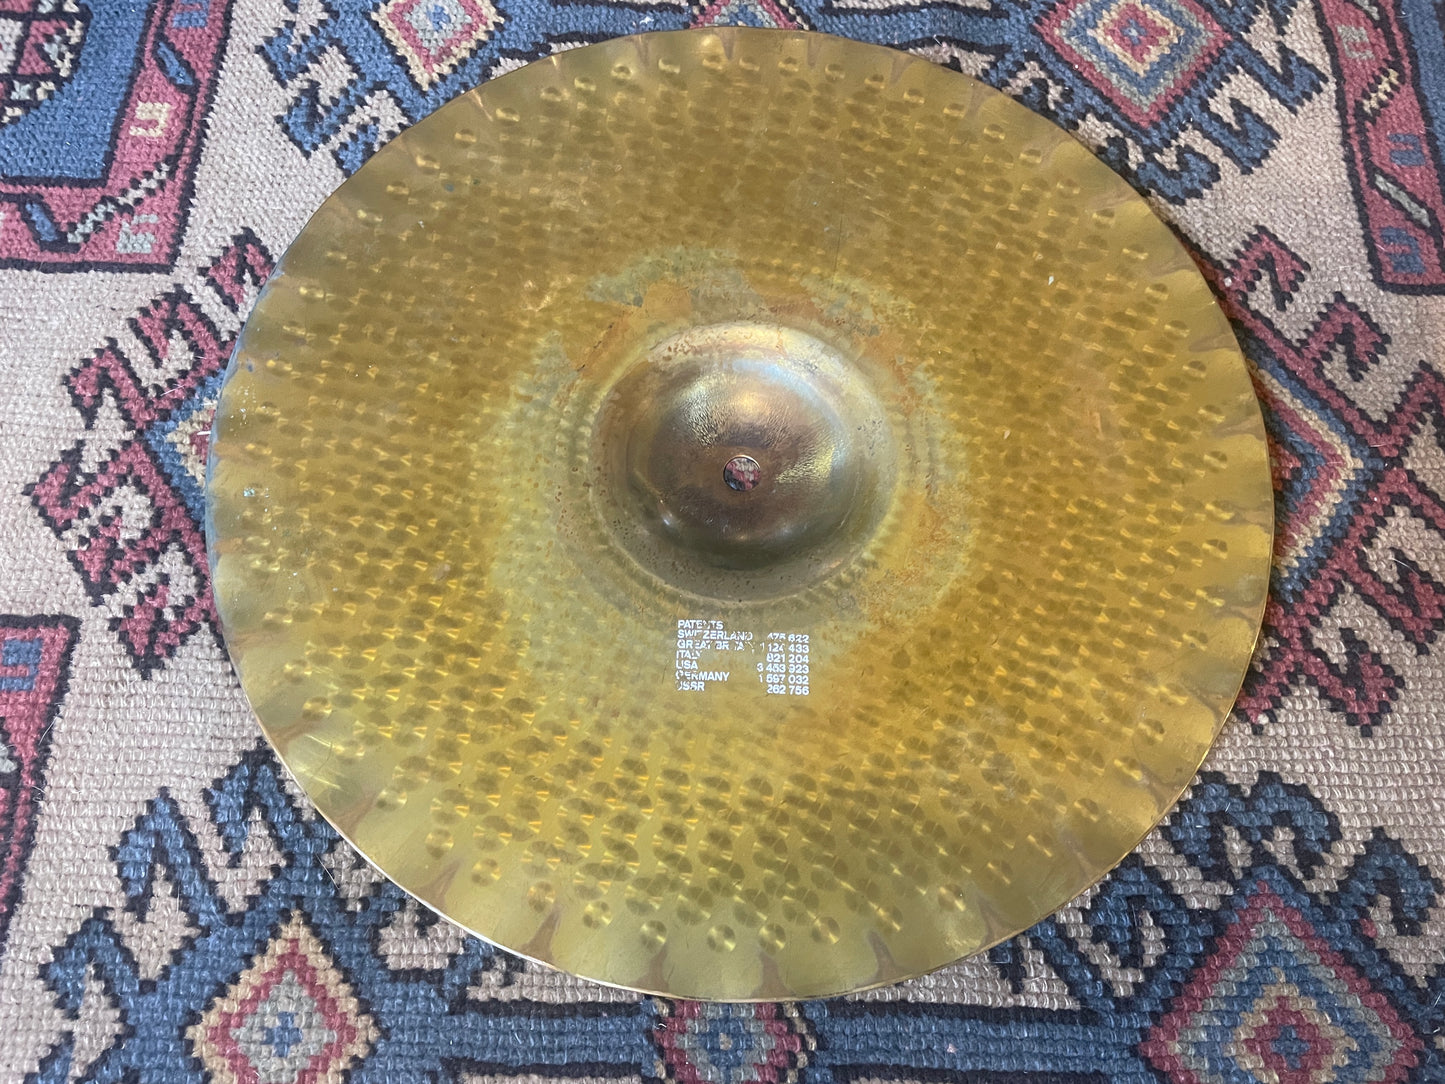 13" Paiste Rude Sound Edge Bottom Hi-Hat Cymbal 952g